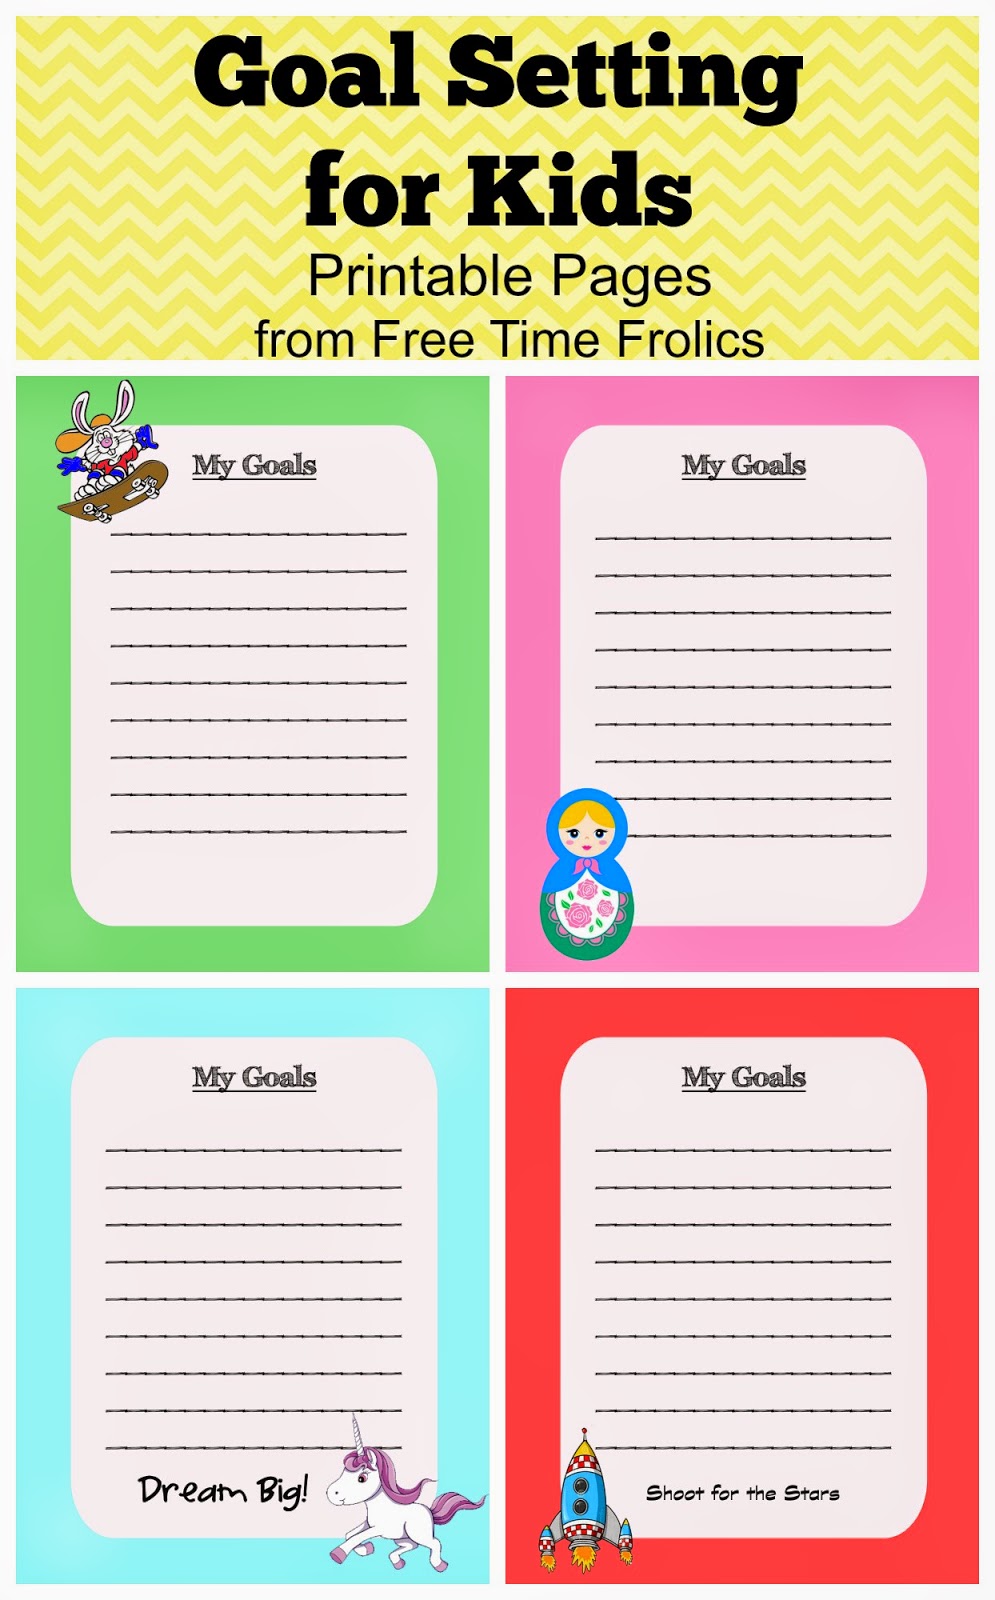 Goal setting printable's for kids via www.freetimefrolics.com #printable #goals #free